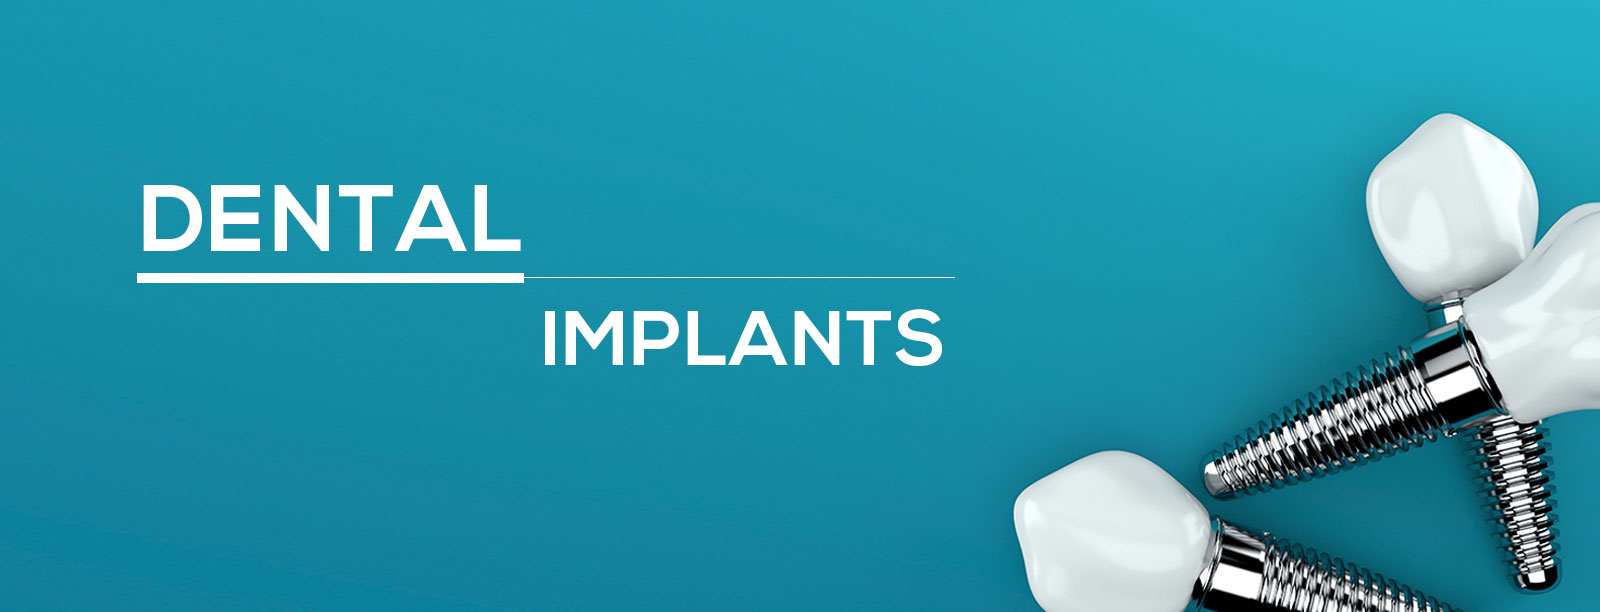 dental implants in chennai, tamil nadu, india